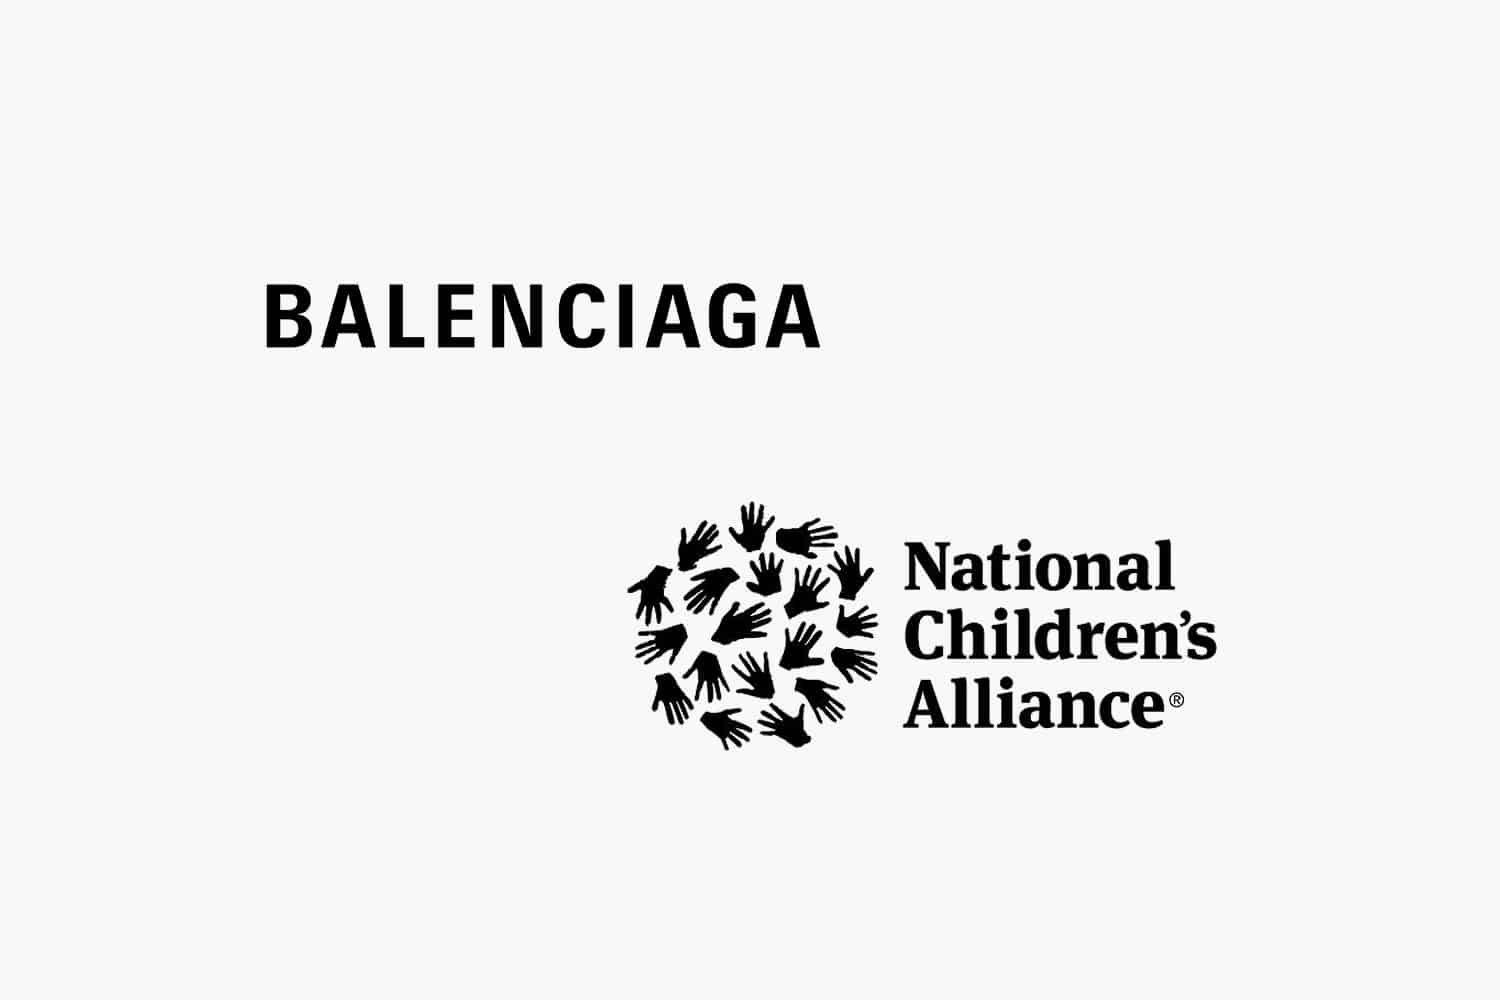 Balenciaga Kering National Children